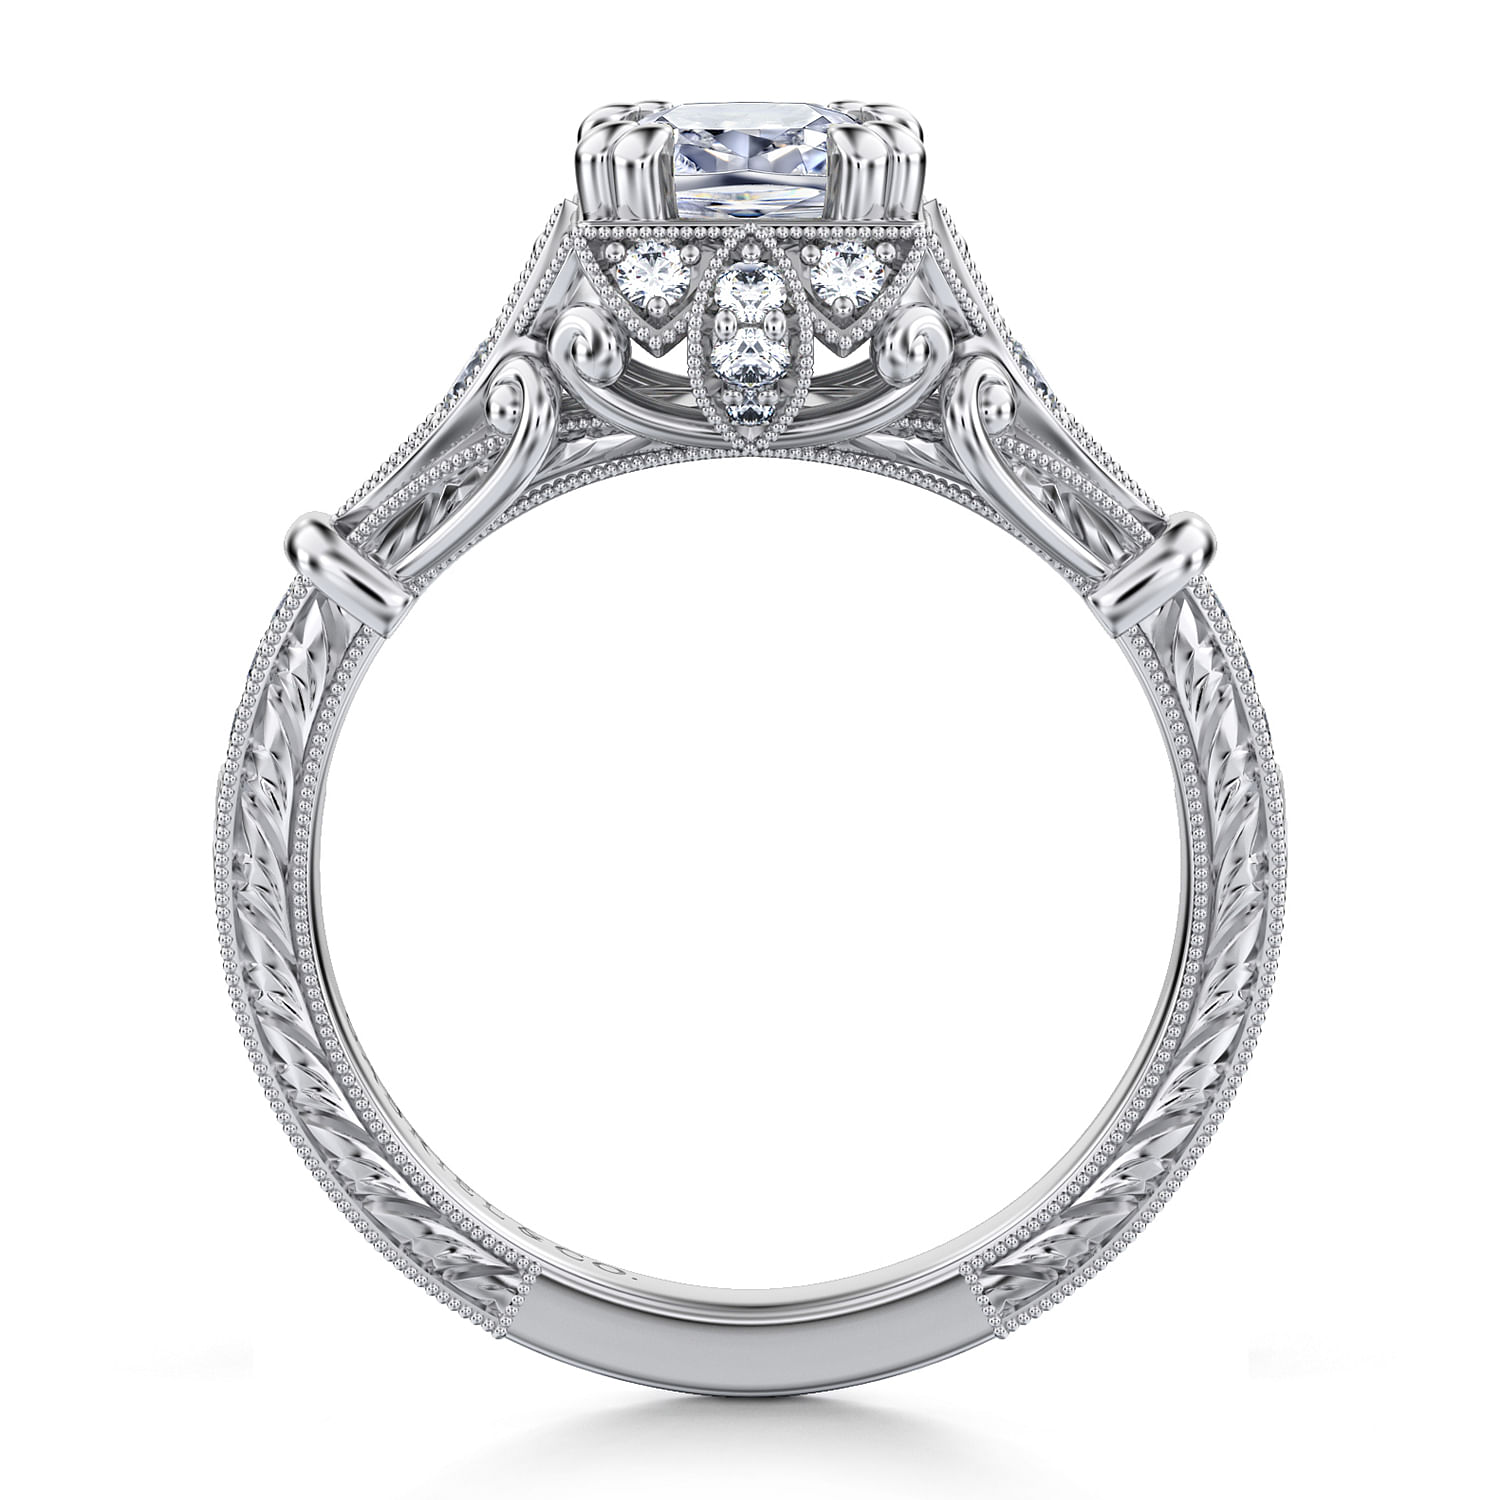 Montgomery - Unique 14K White Gold Vintage Inspired Cushion Cut Halo Diamond Engagement Ring - 0.27 ct - Shot 2